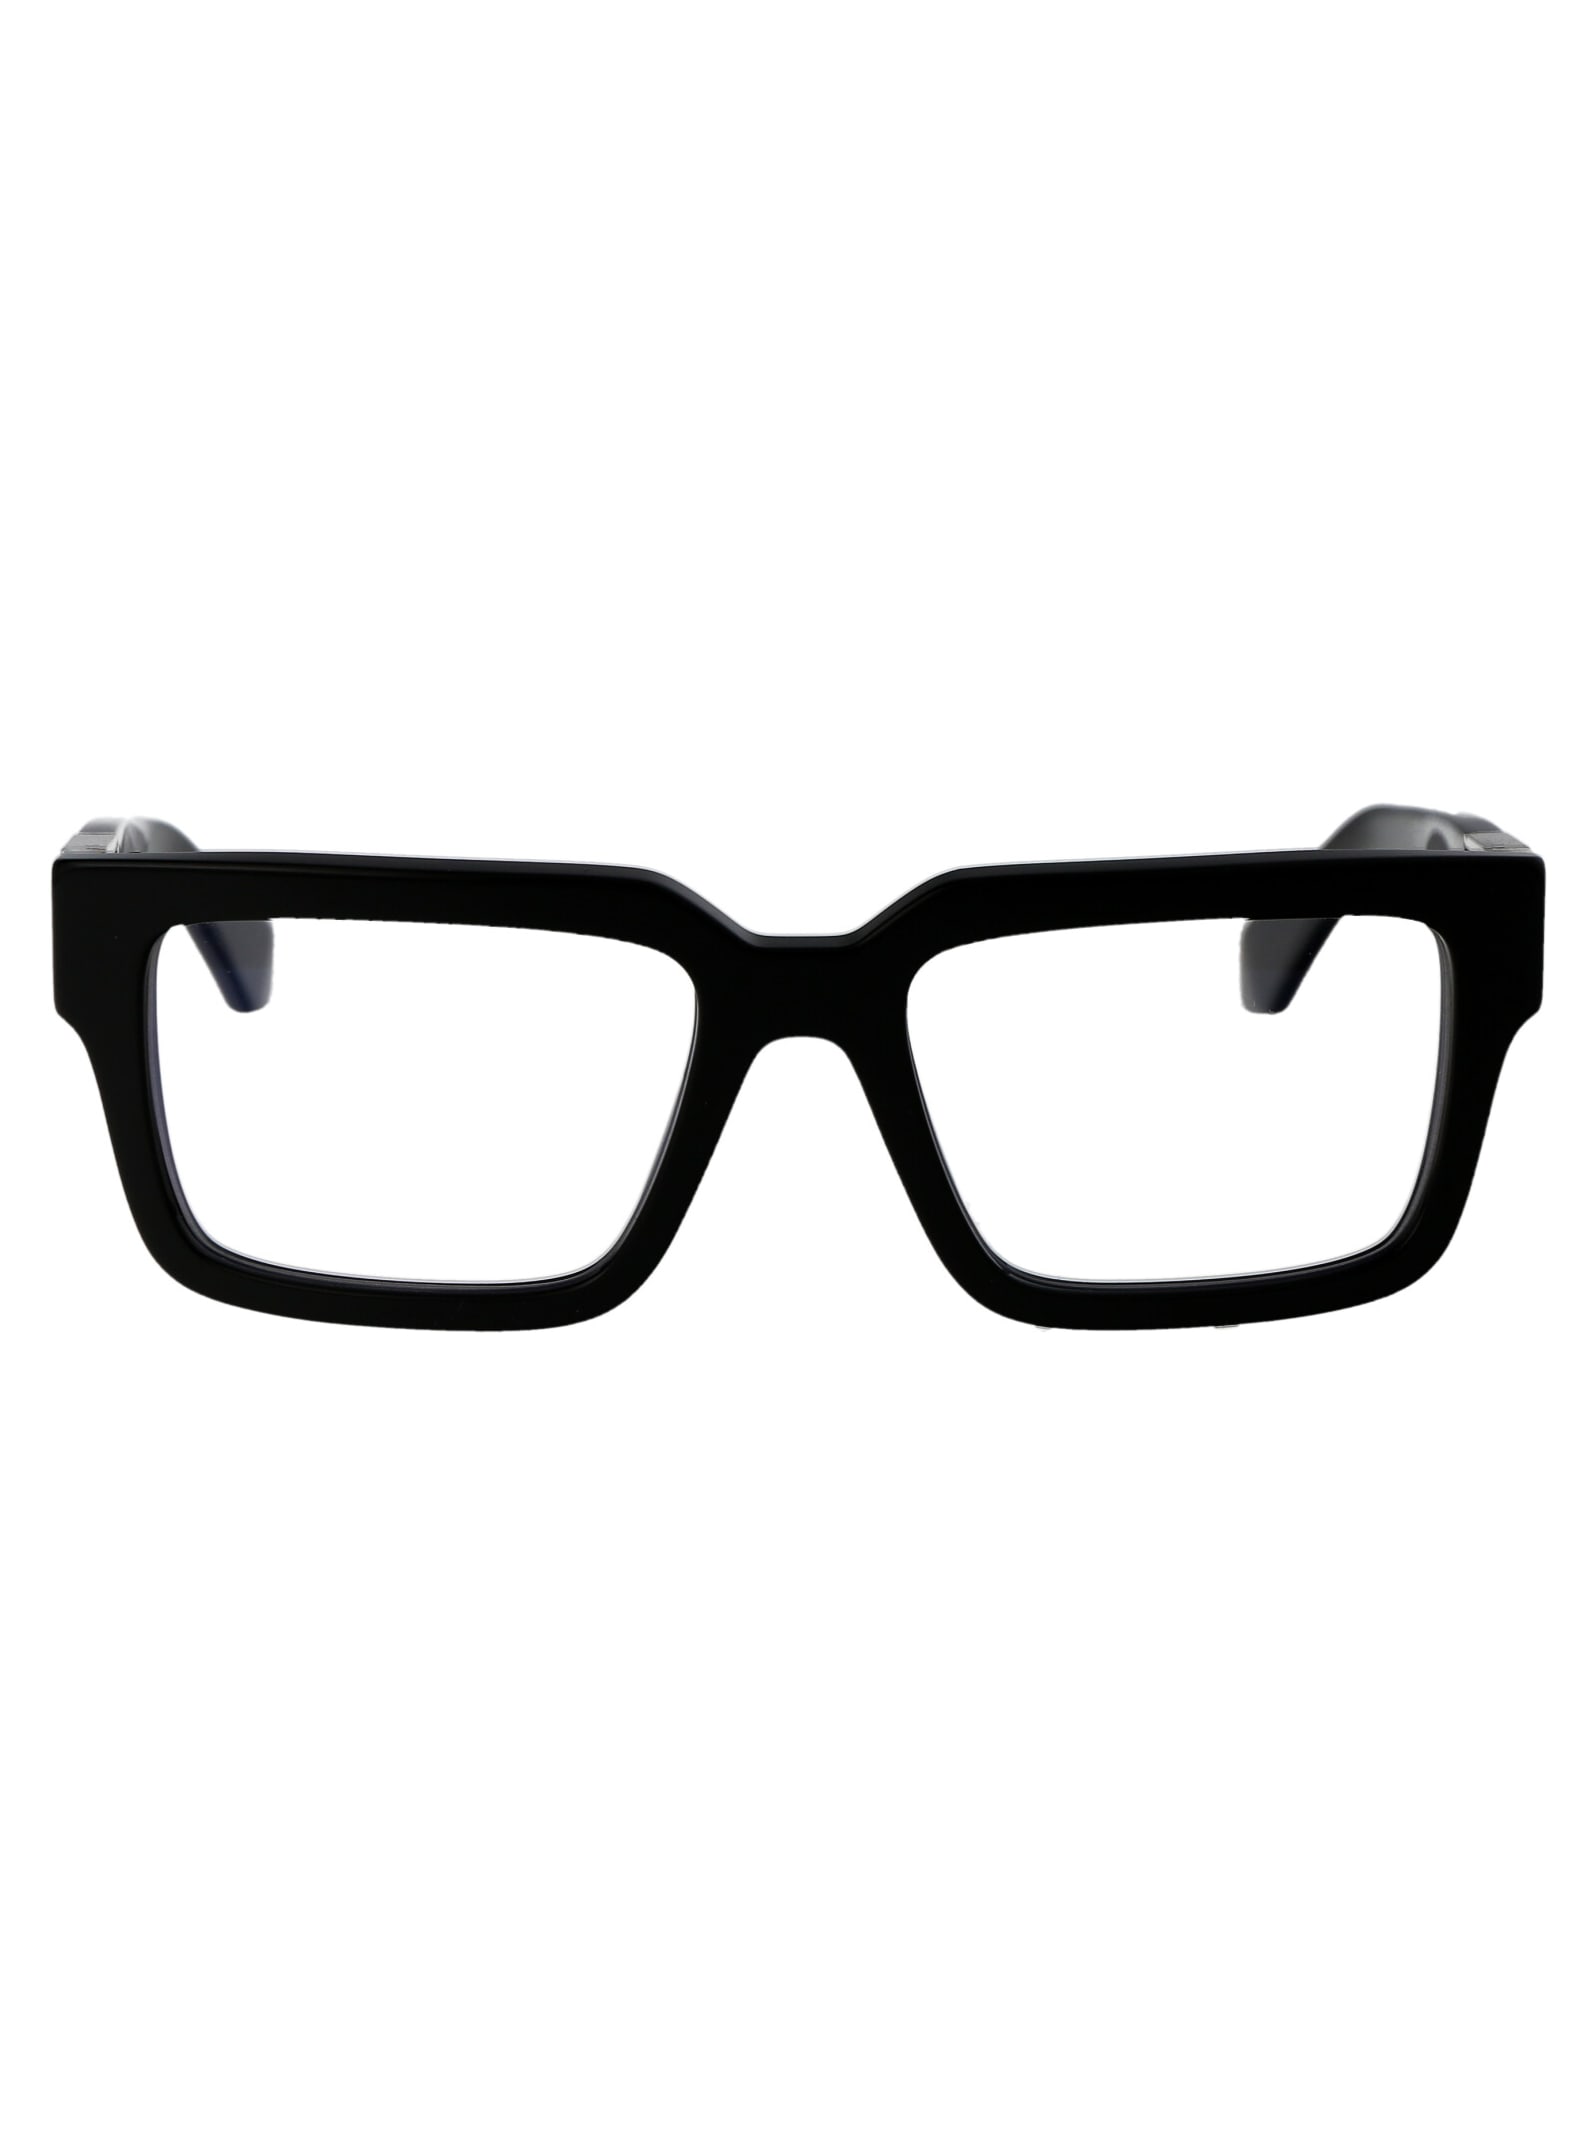 Optical Style 15 Glasses